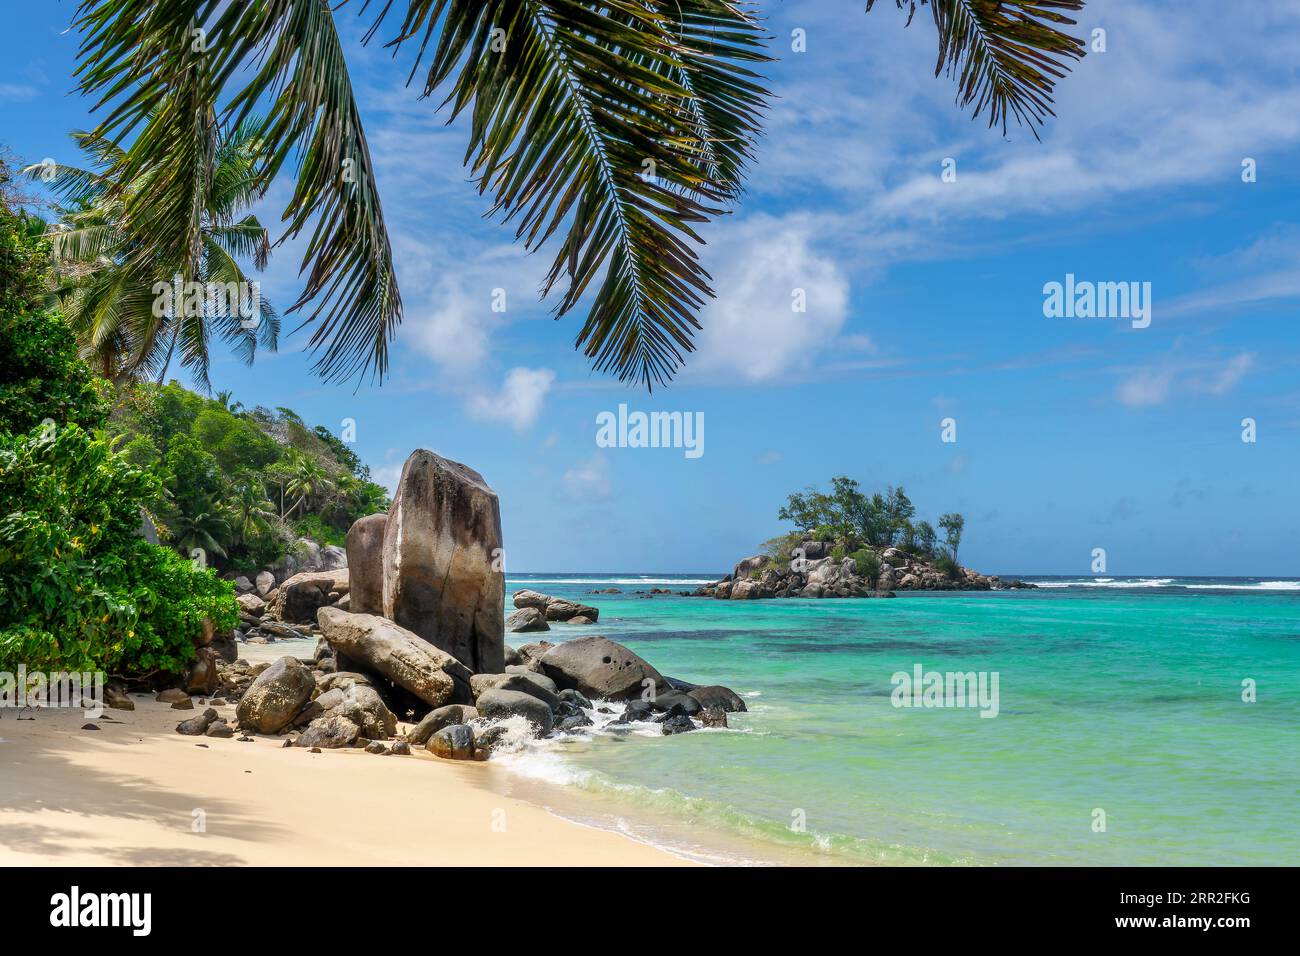 Rocks, boulders and palm trees on the scenic Fairytale tropical sandy beach, Mahé island, Seychelles Stock Photo